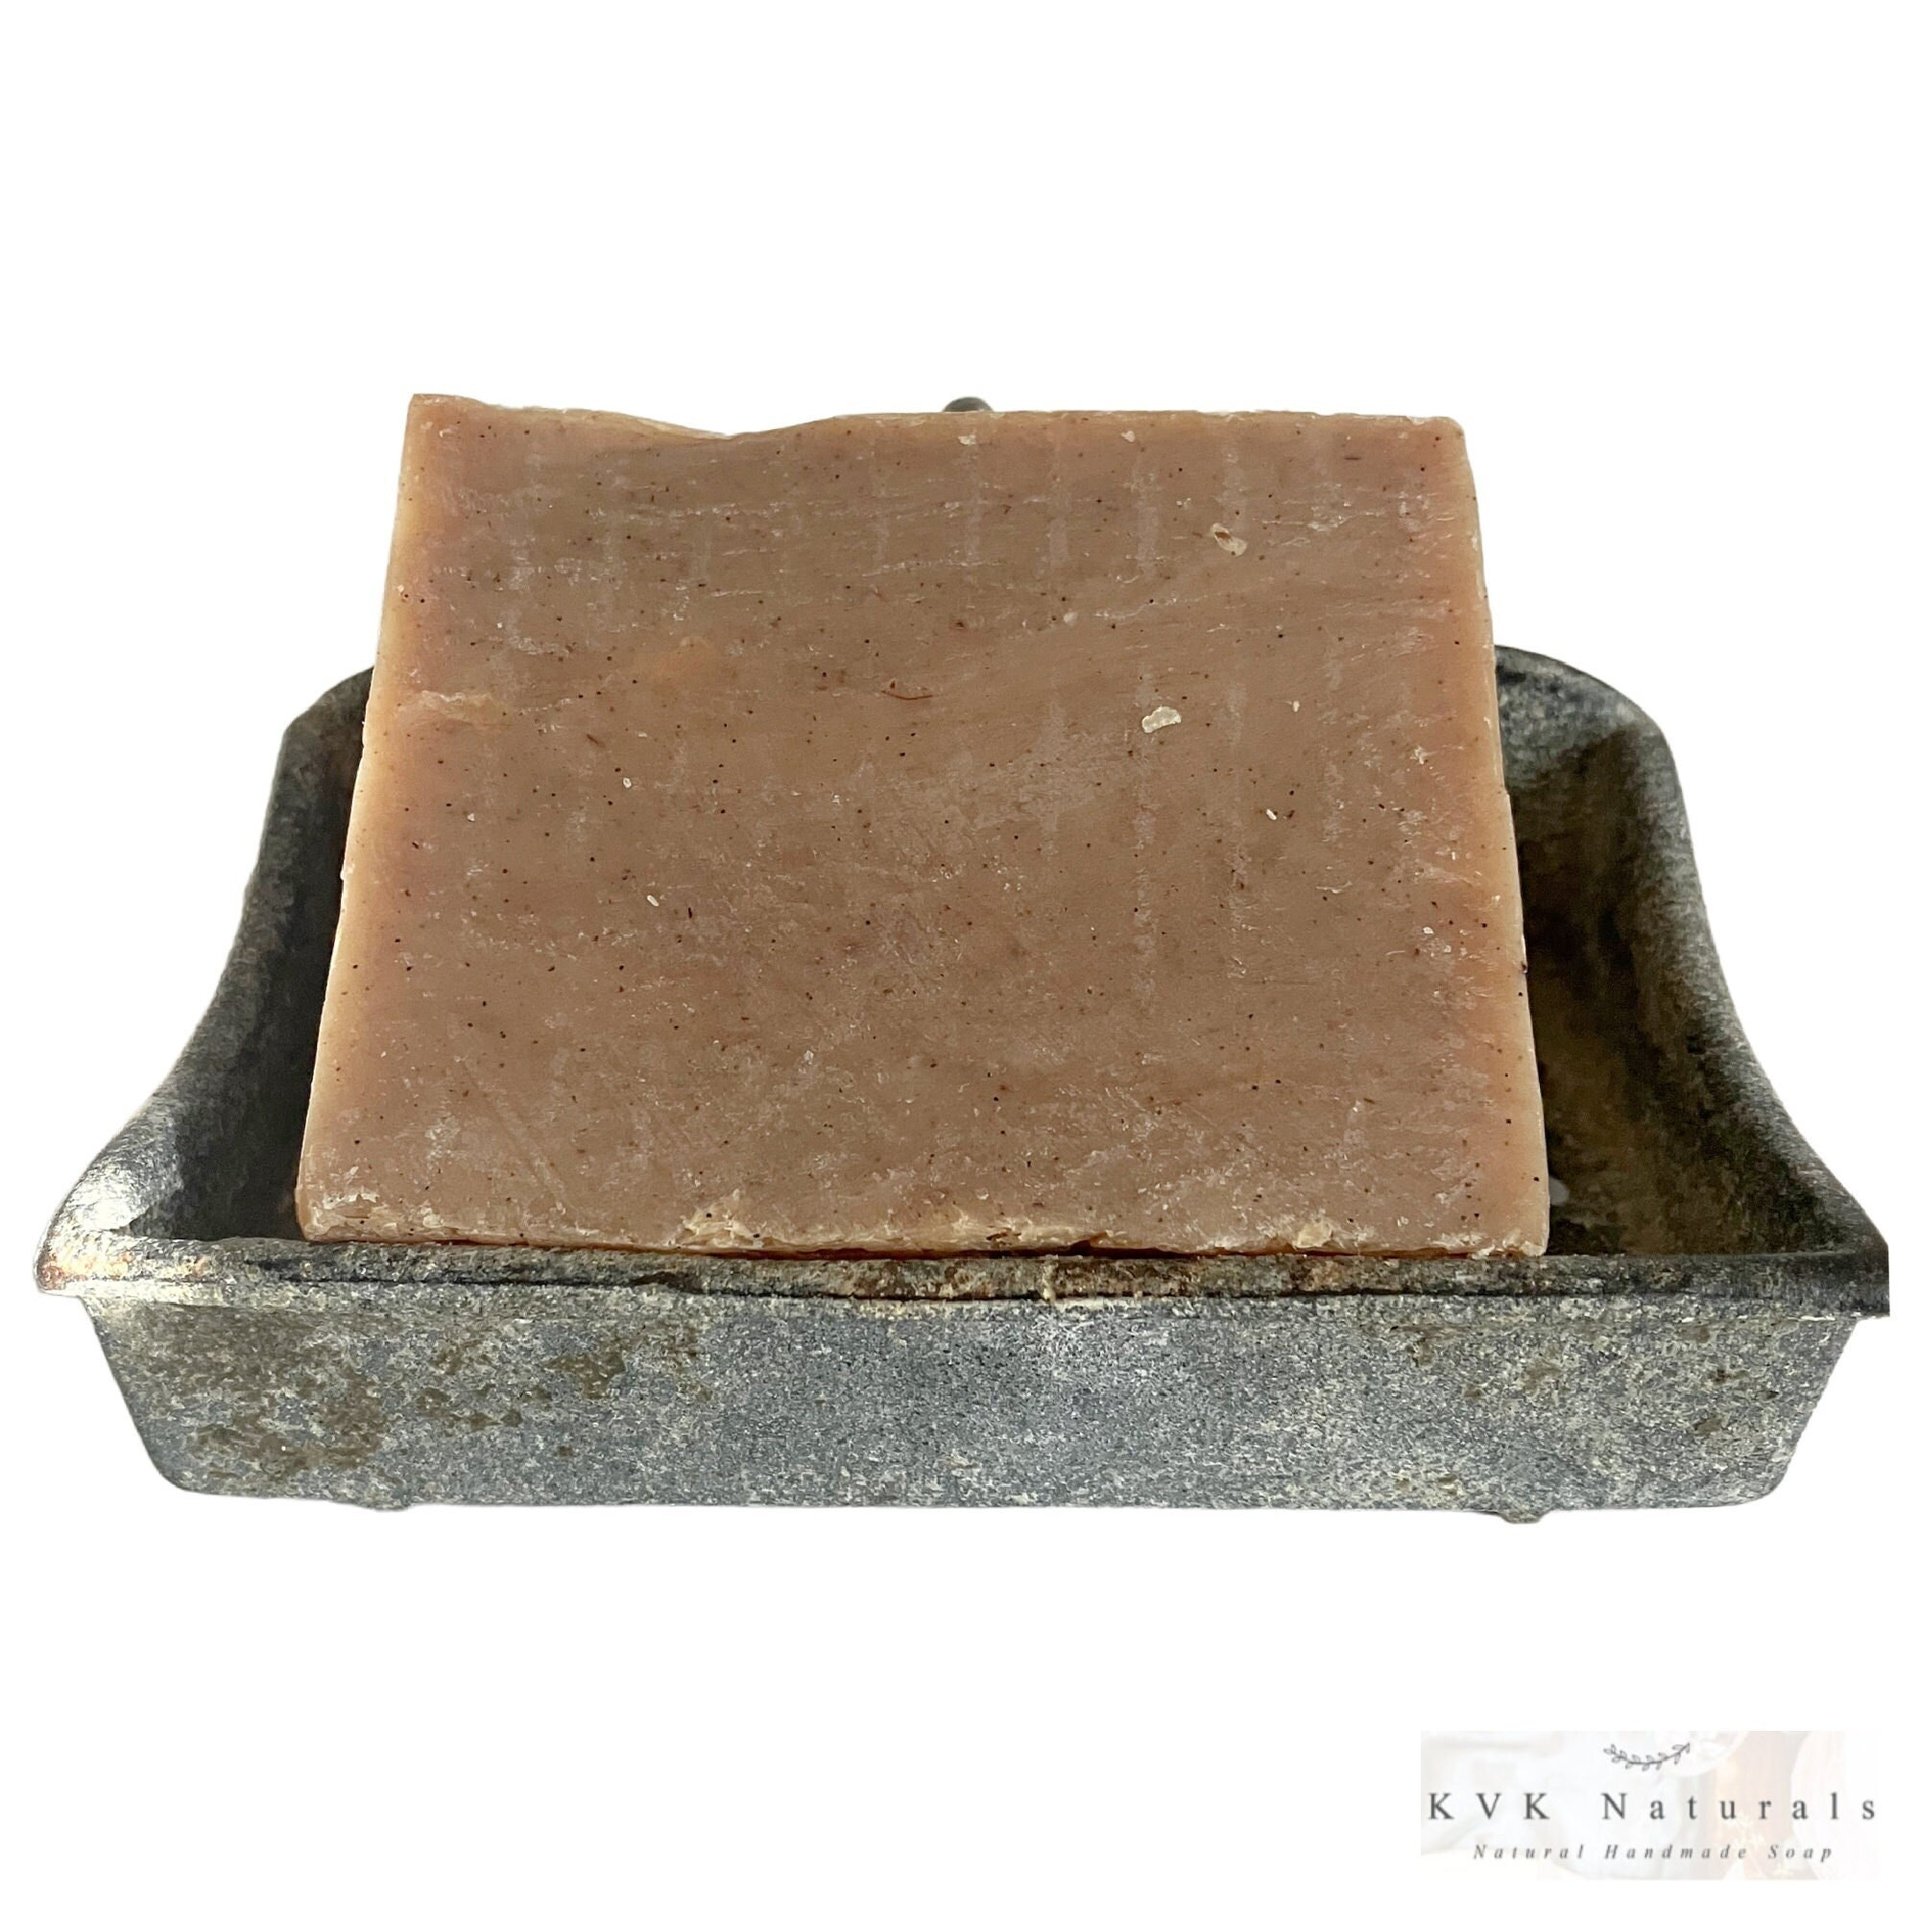 Orange Vanilla Soap Bar - Handmade Soap, Natural Soap, Organic Soap, Cold Process Soap